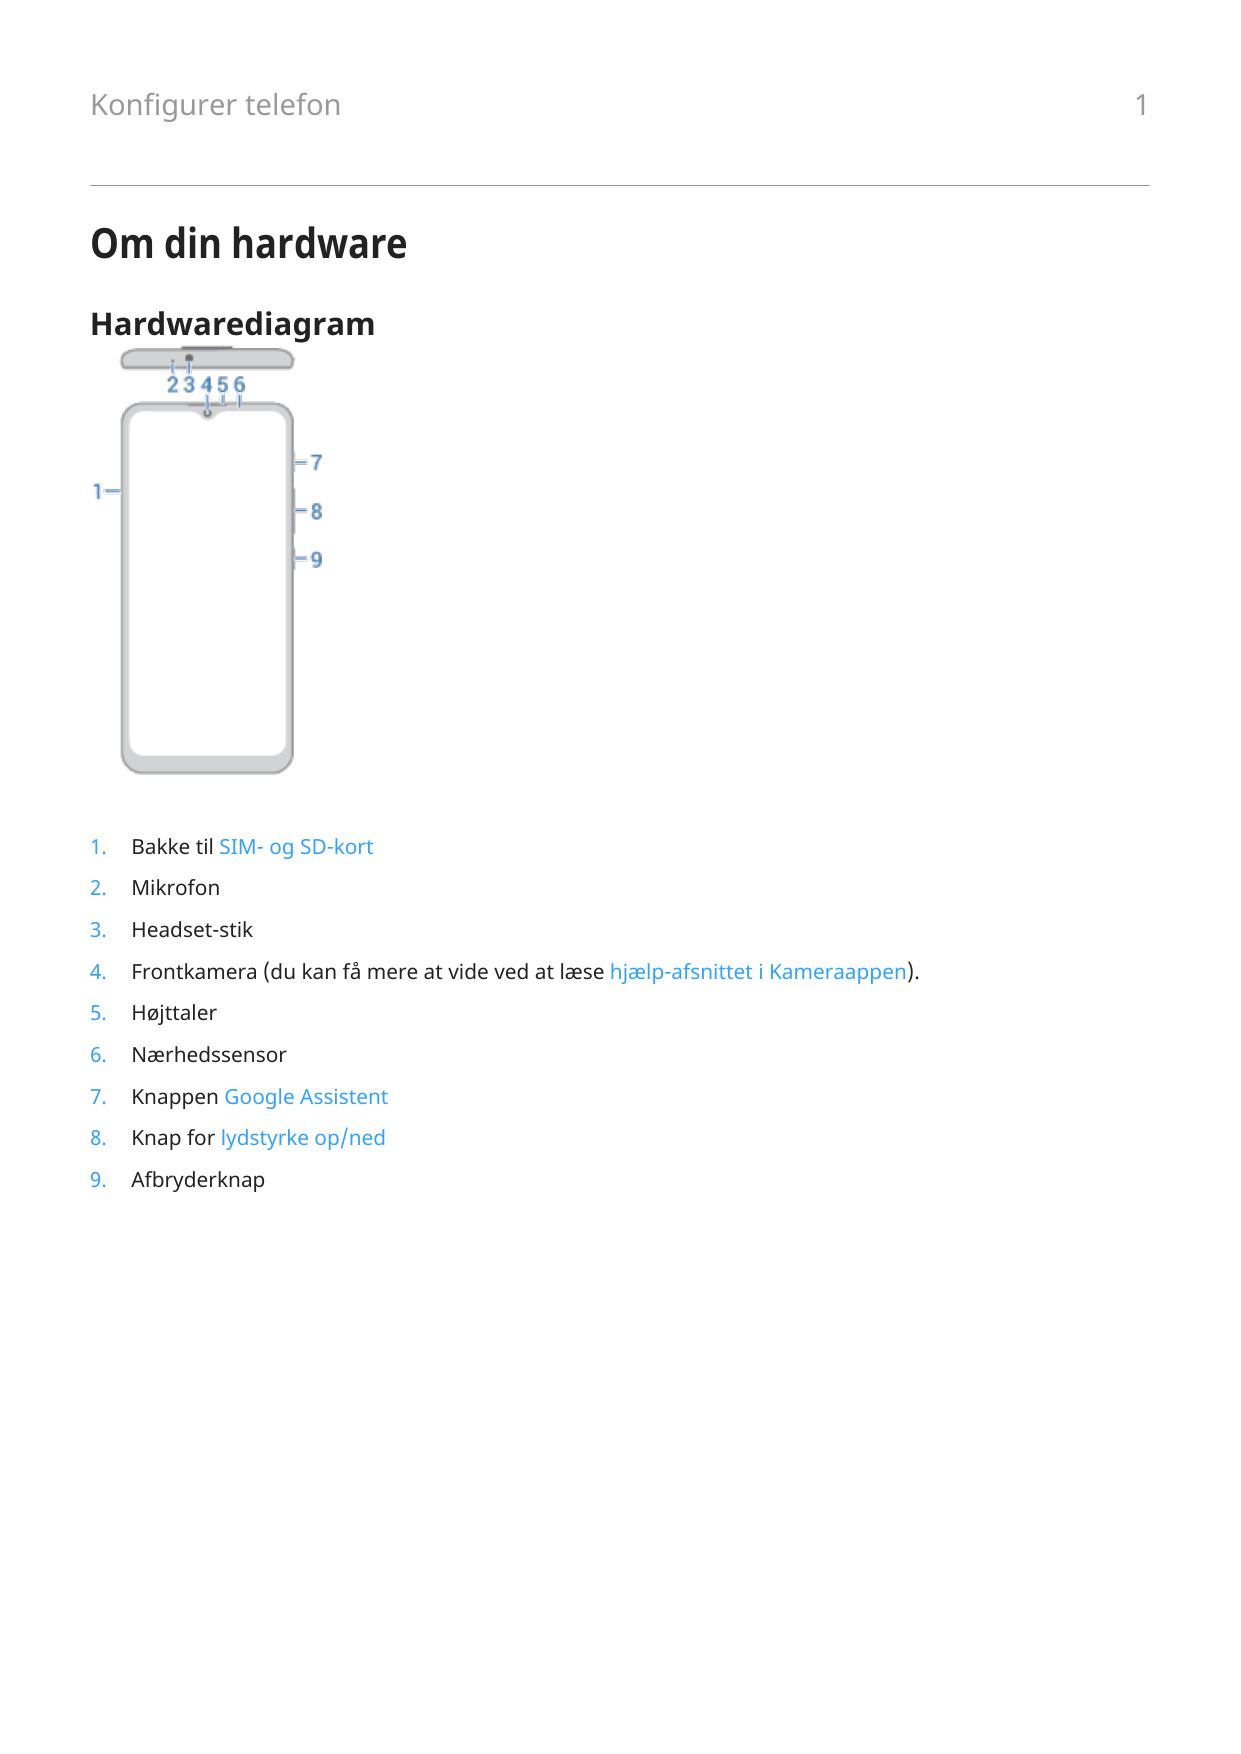 Konfigurer telefonOm din hardwareHardwarediagram1.Bakke til SIM- og SD-kort2.Mikrofon3.Headset-stik4.Frontkamera (du kan få mere